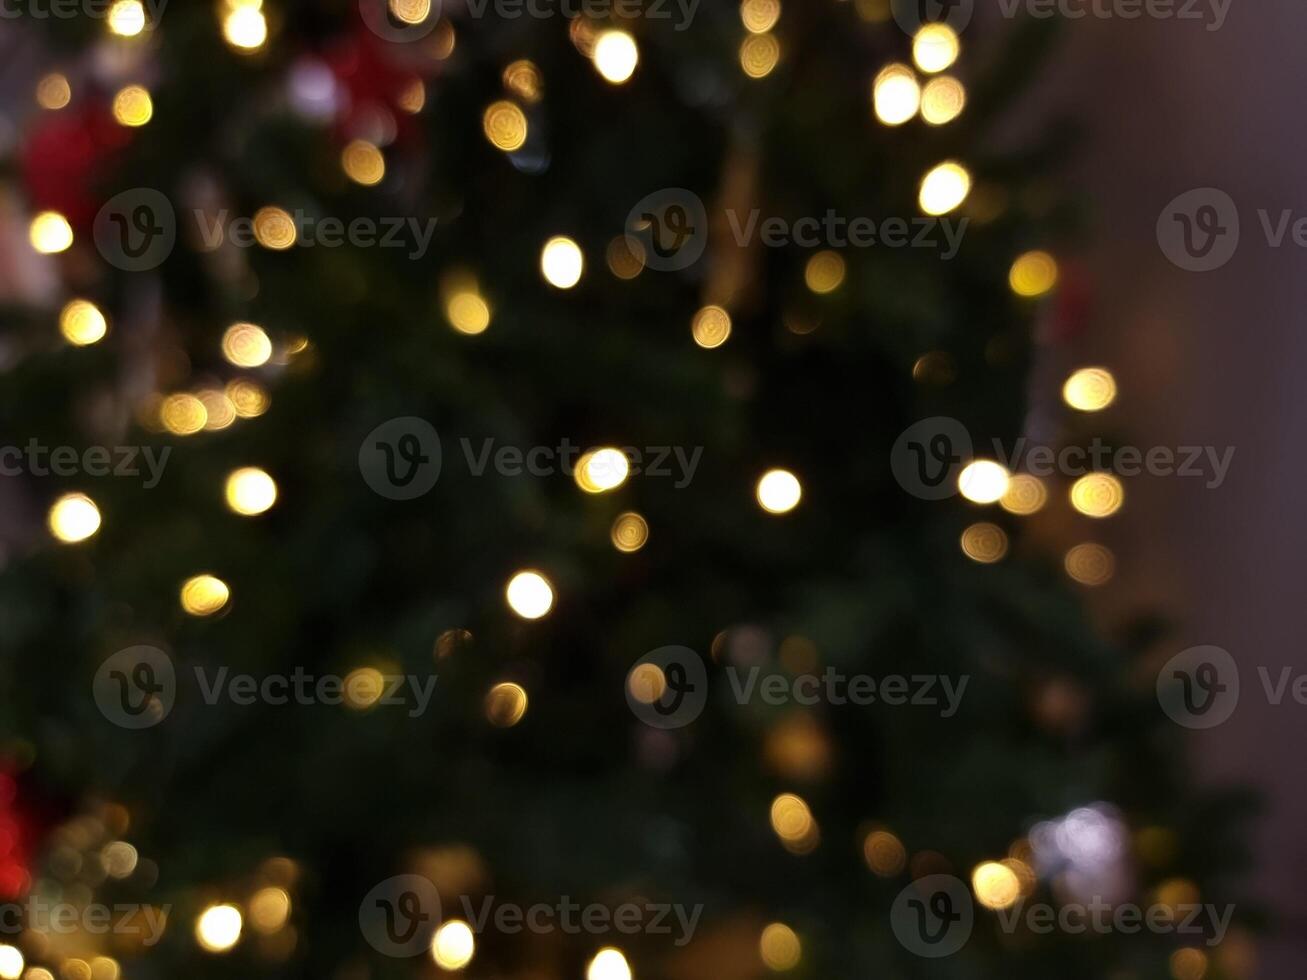 abstrato bokeh Natal árvore Estrela borrão luz círculo vermelho laranja e branco brilhando flare padronizar Preto fundo foto